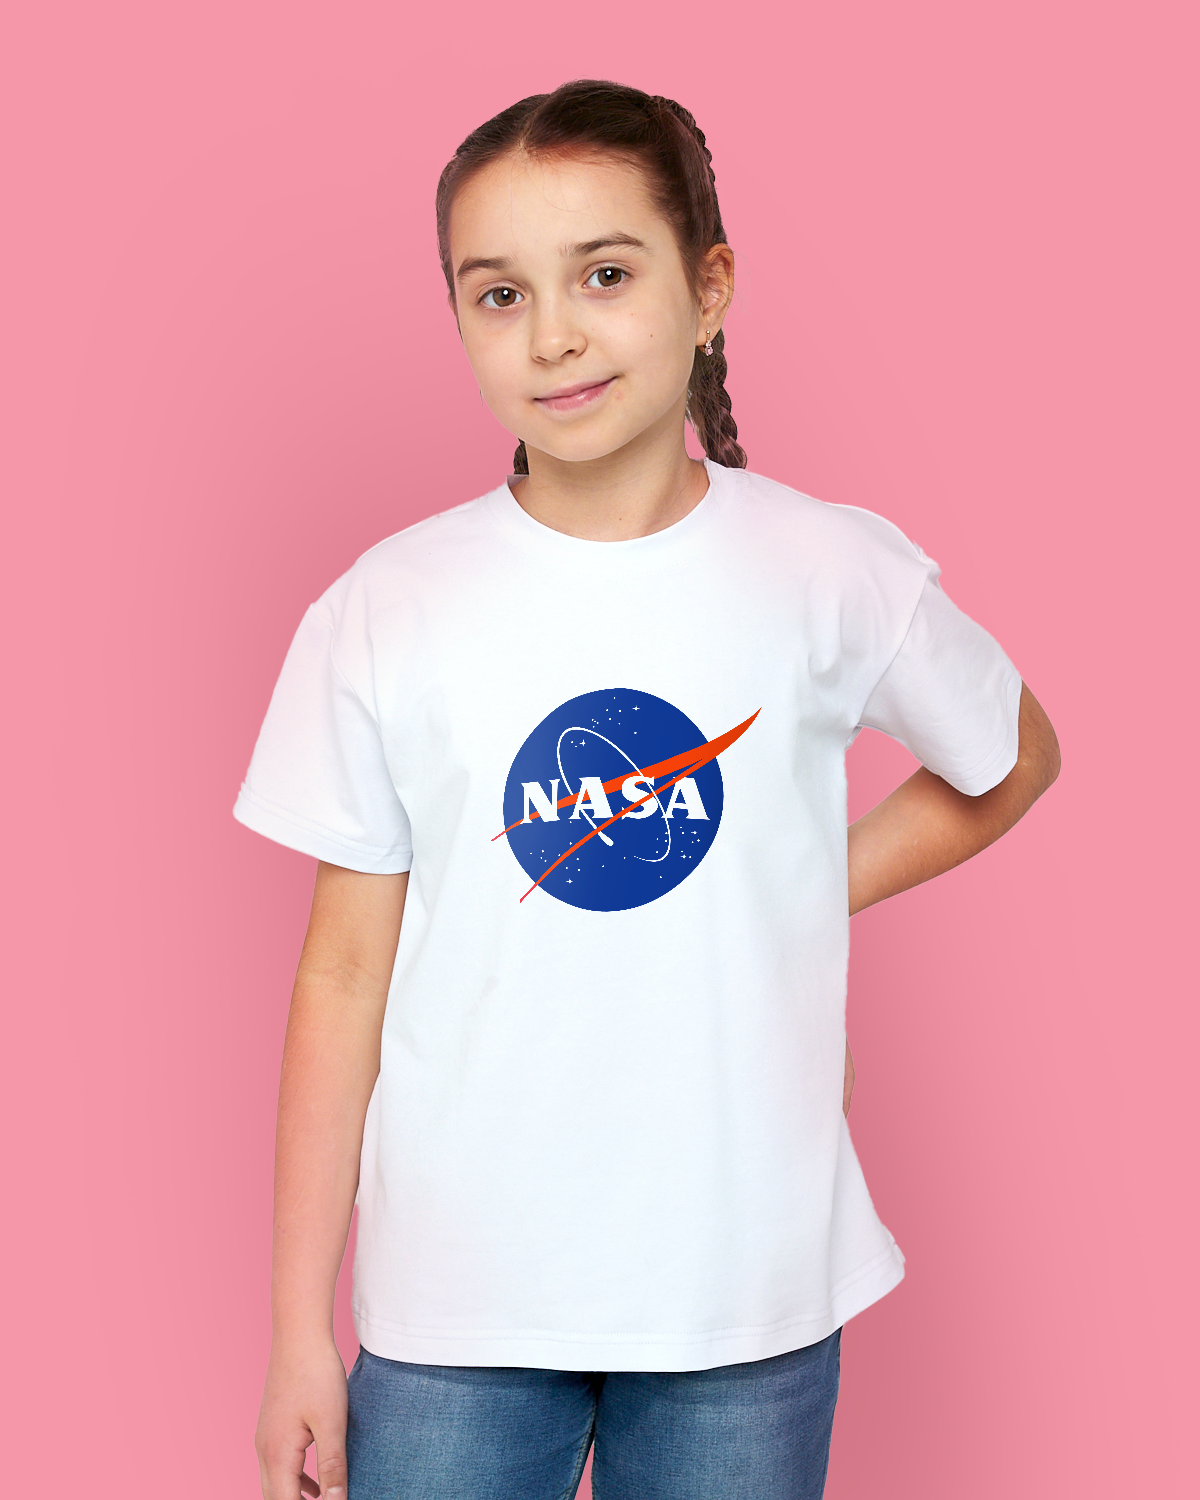 Girls' T-Shirt (NASA)